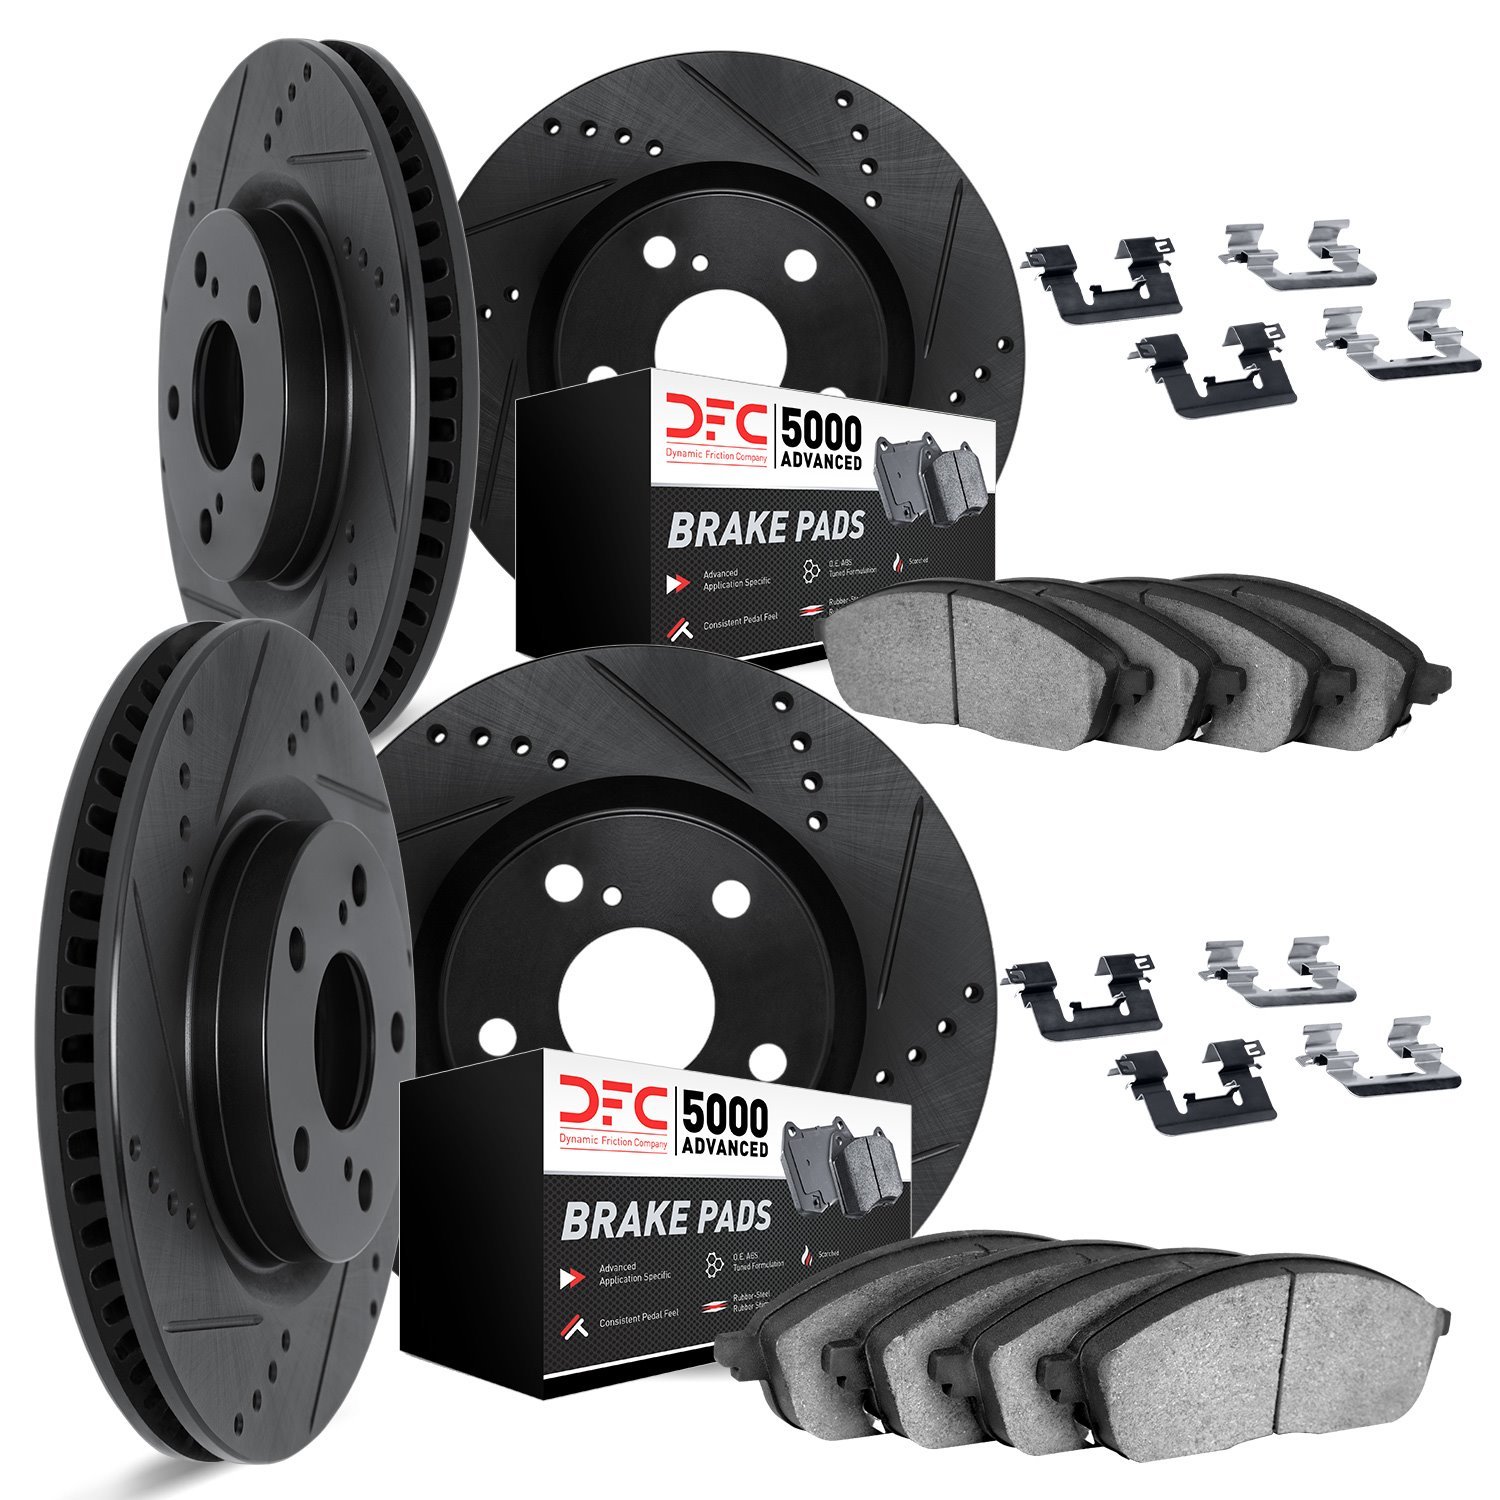 8514-92001 Drilled/Slotted Brake Rotors w/5000 Advanced Brake Pads Kit & Hardware [Black], 2002-2007 Infiniti/Nissan, Position: